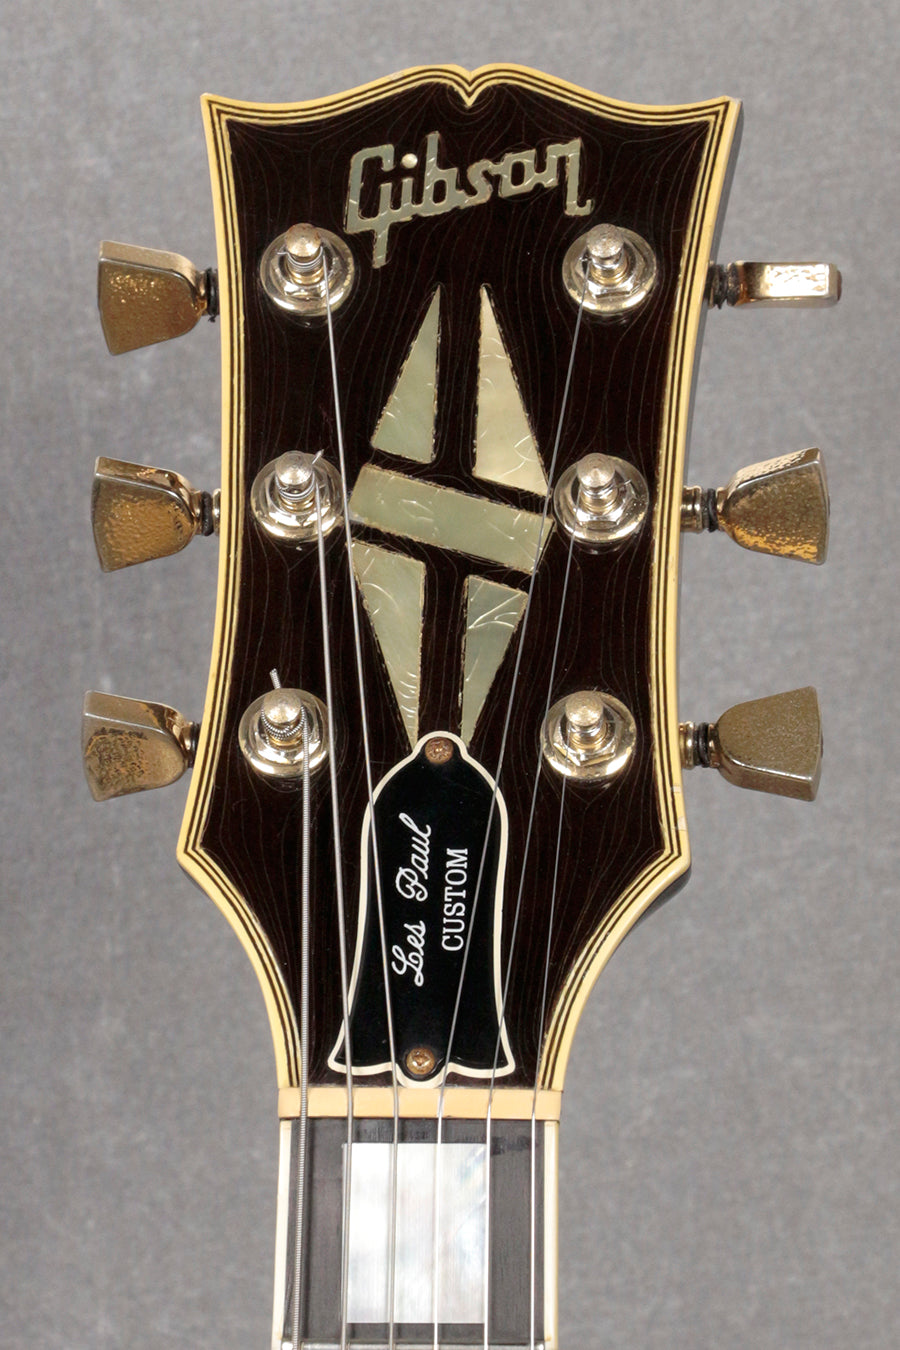 [SN 82199523] USED Gibson / 1989 Les Paul Custom Ebony(MOD) [06]